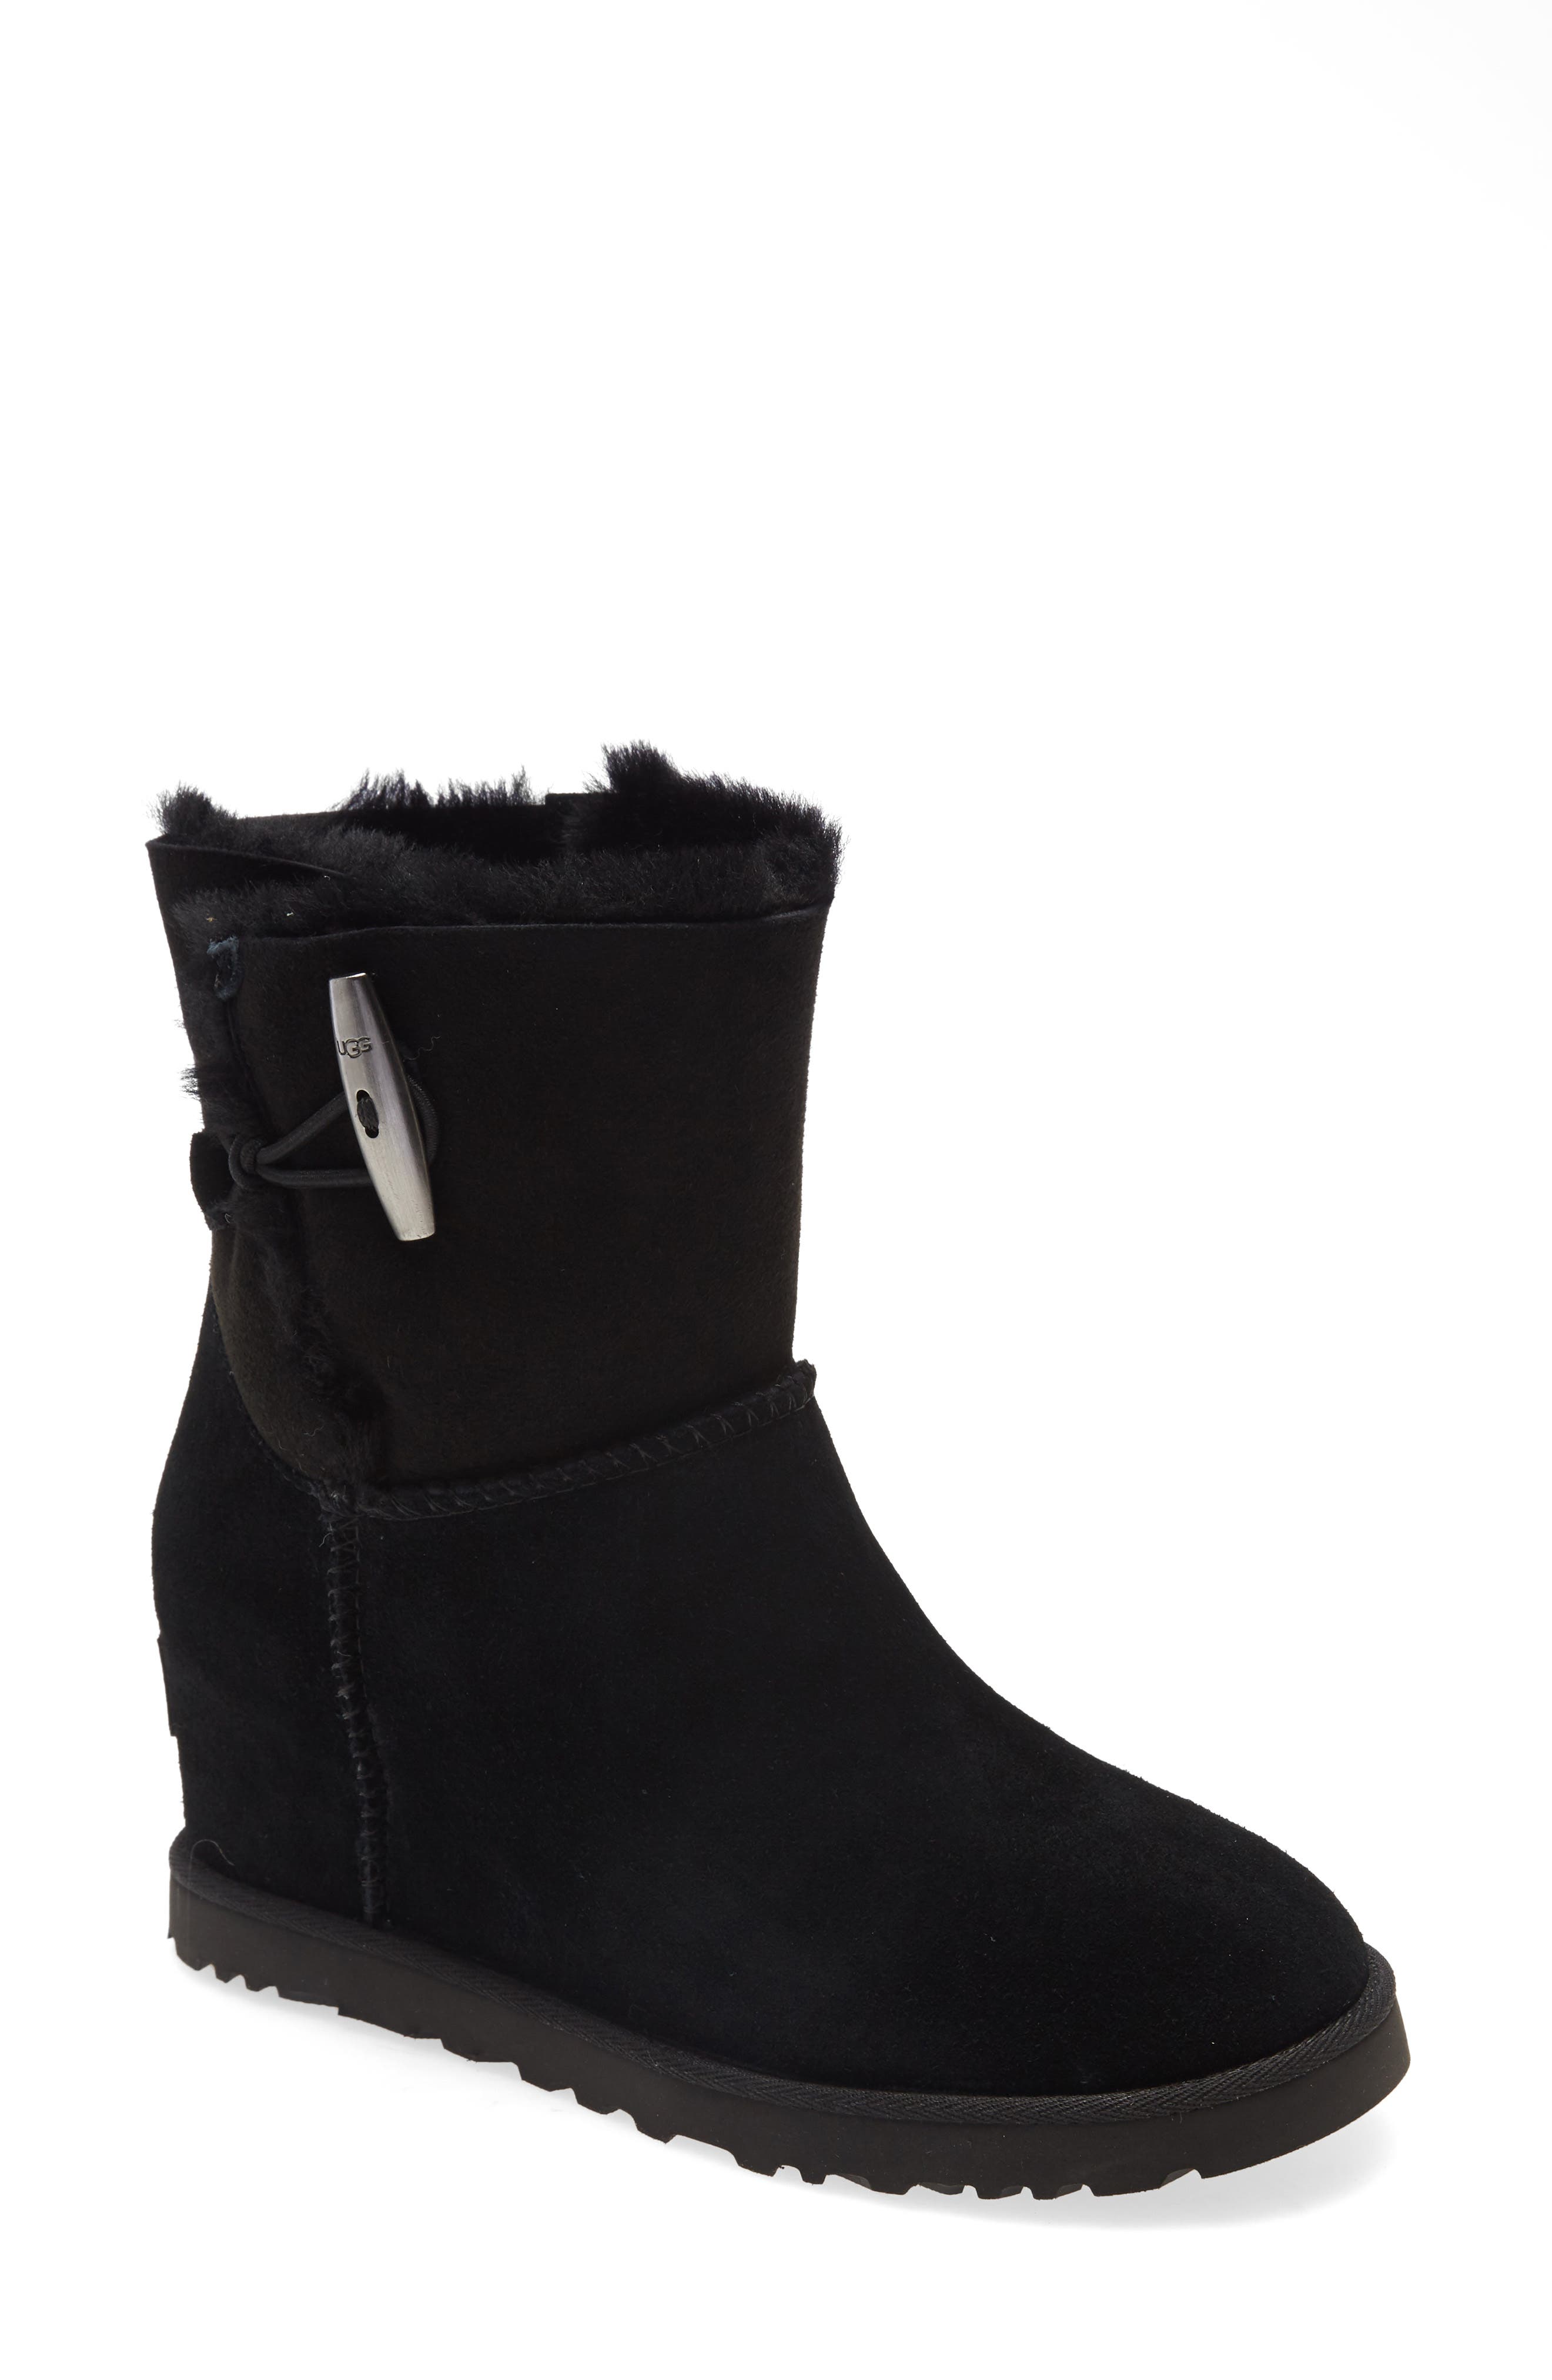 Black Booties \u0026 Ankle Boots | Nordstrom